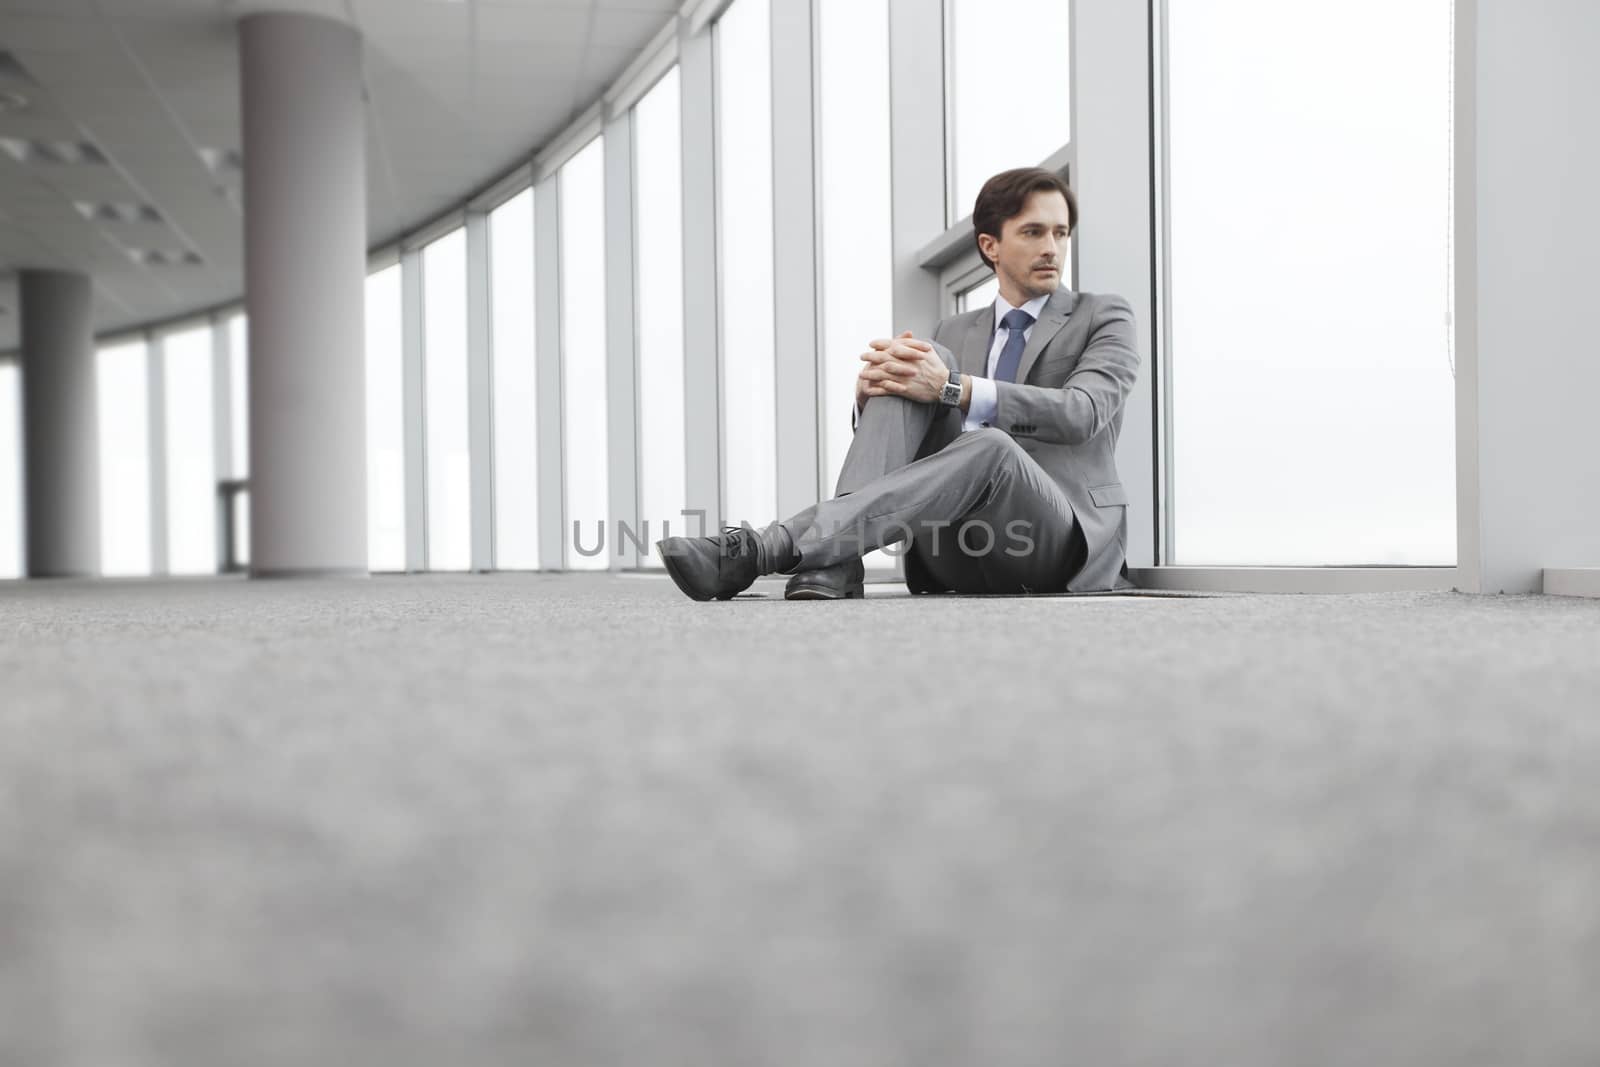 Businessman sitting on floor by ALotOfPeople